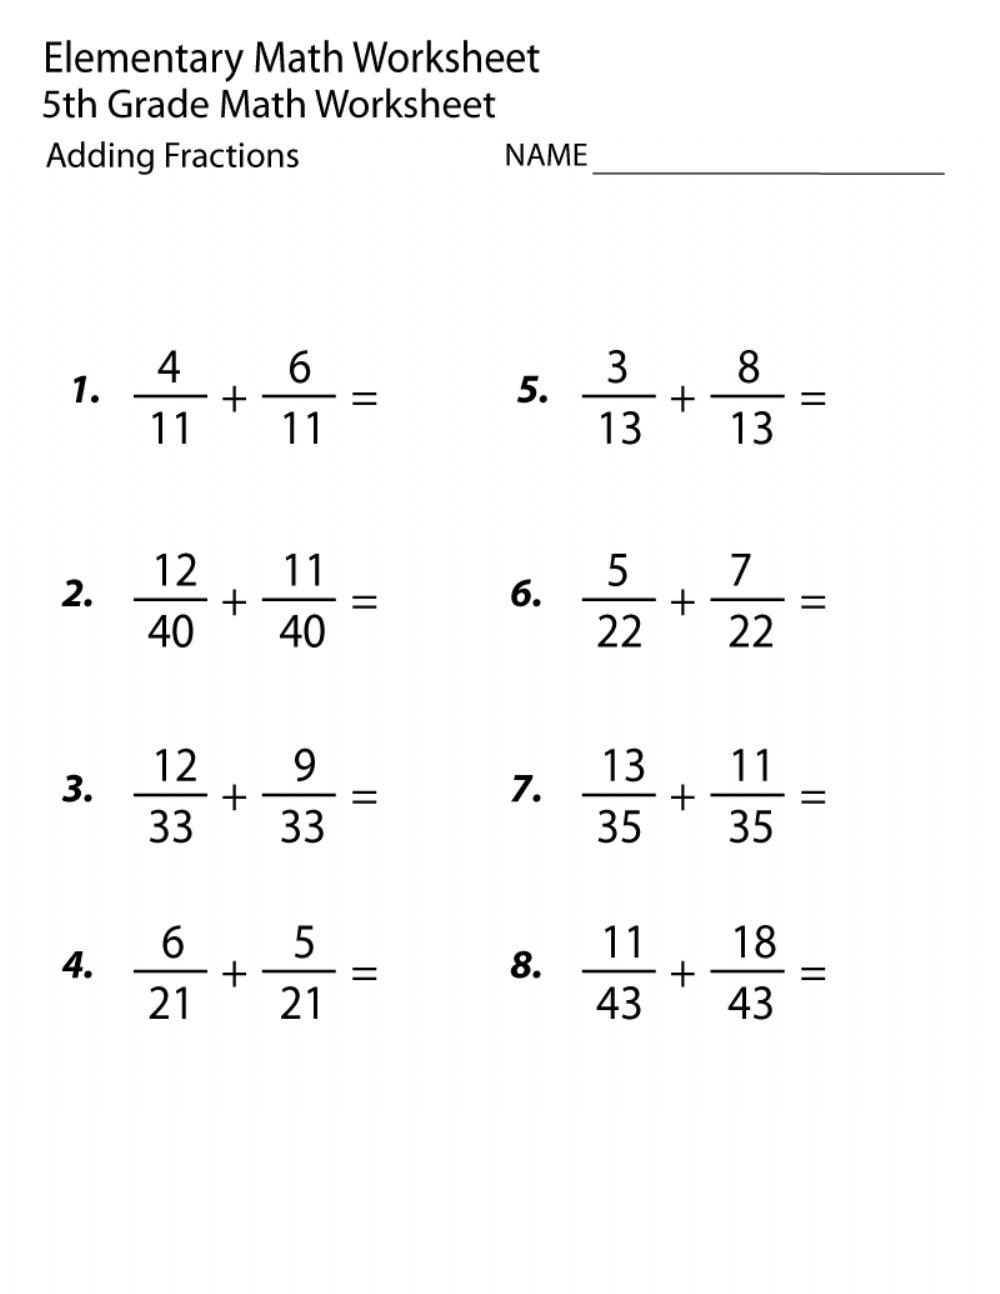 Adding like fractions